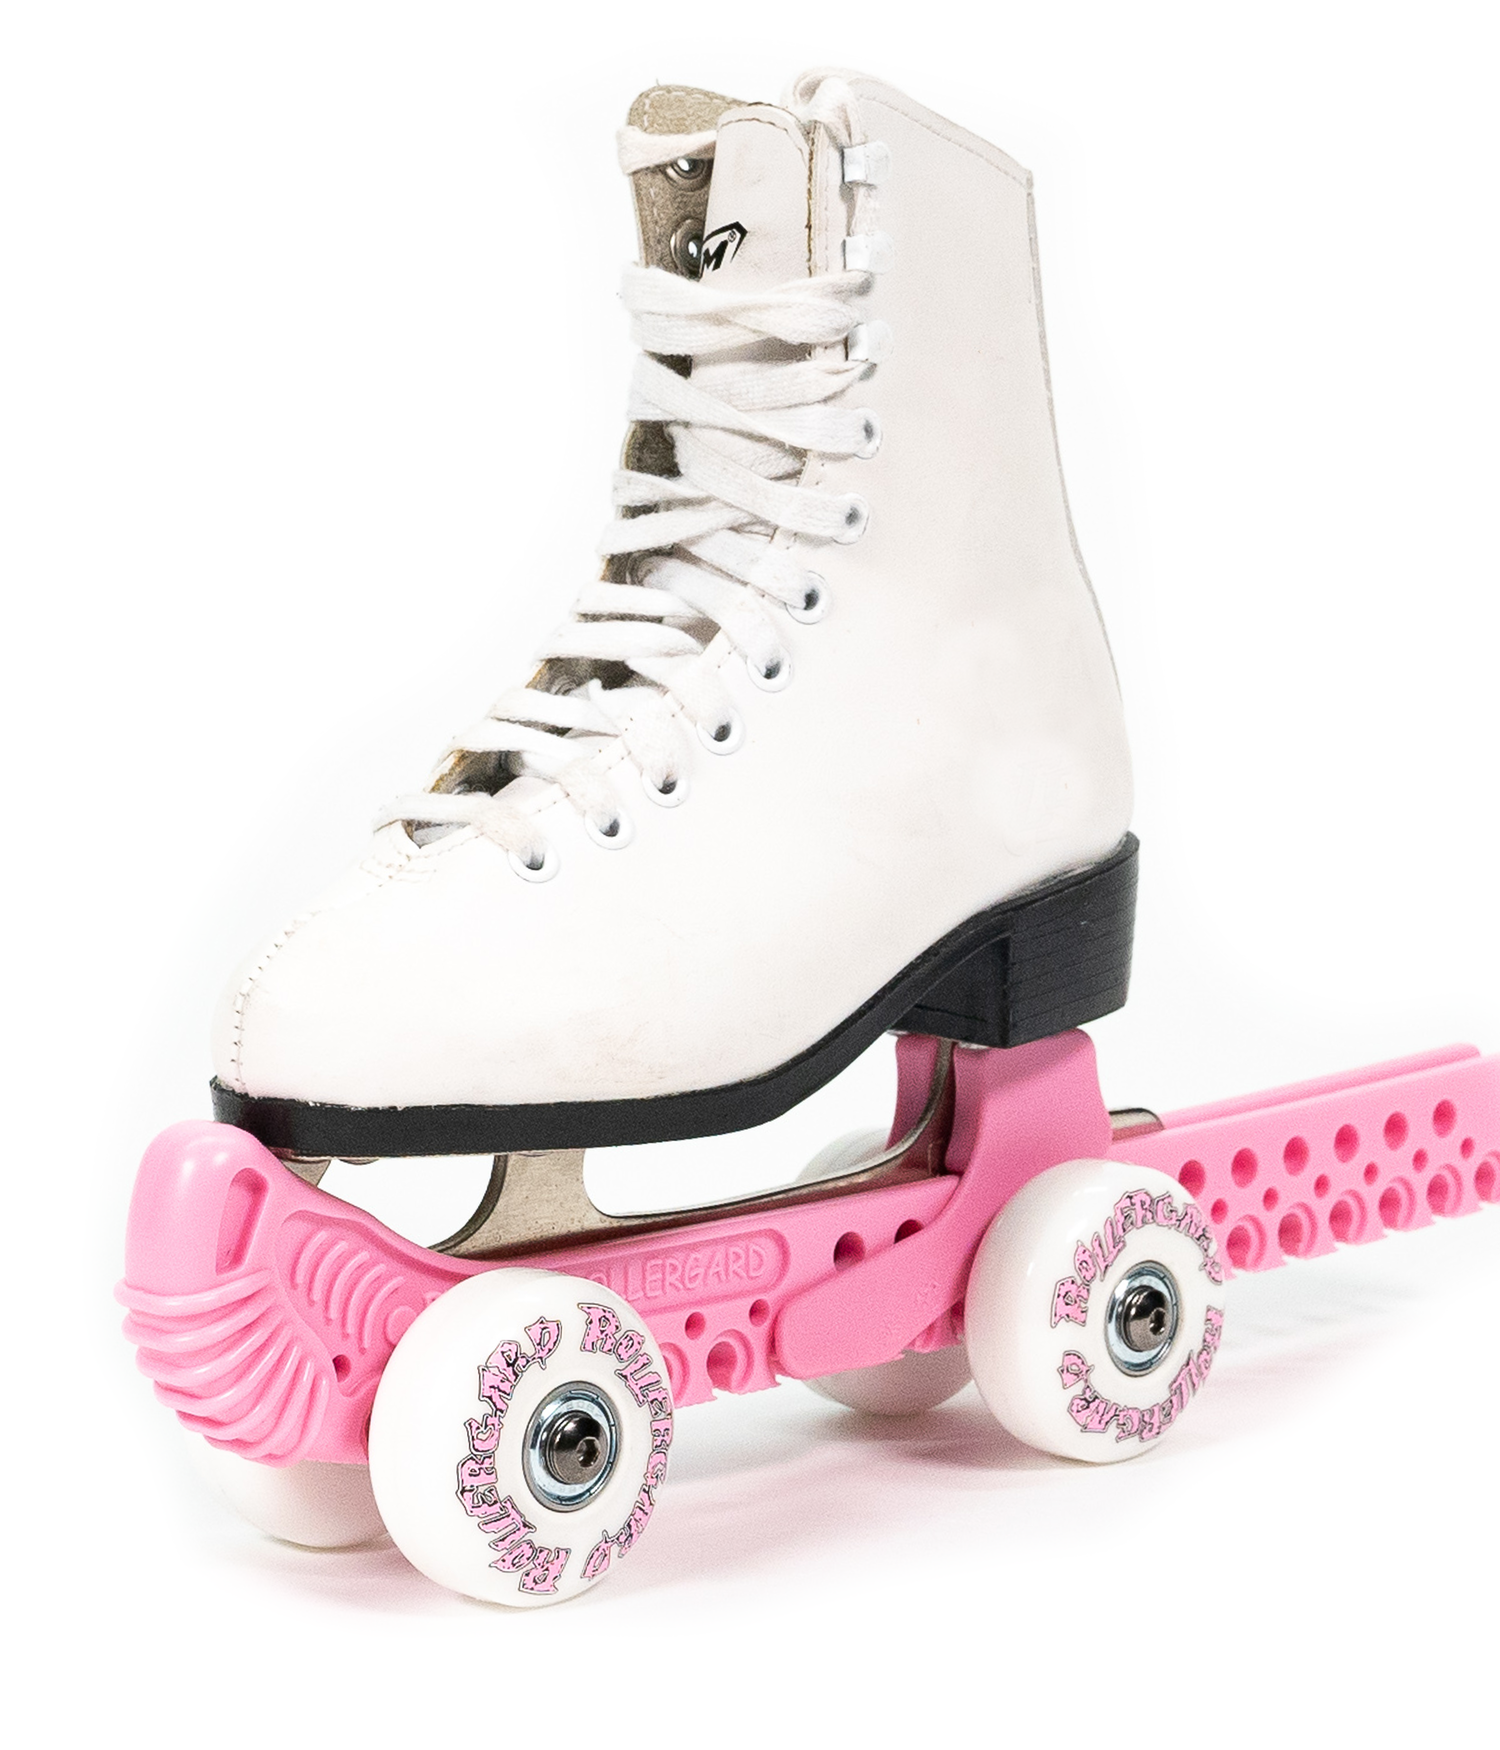 rollergard-figure-skates-roller-guards